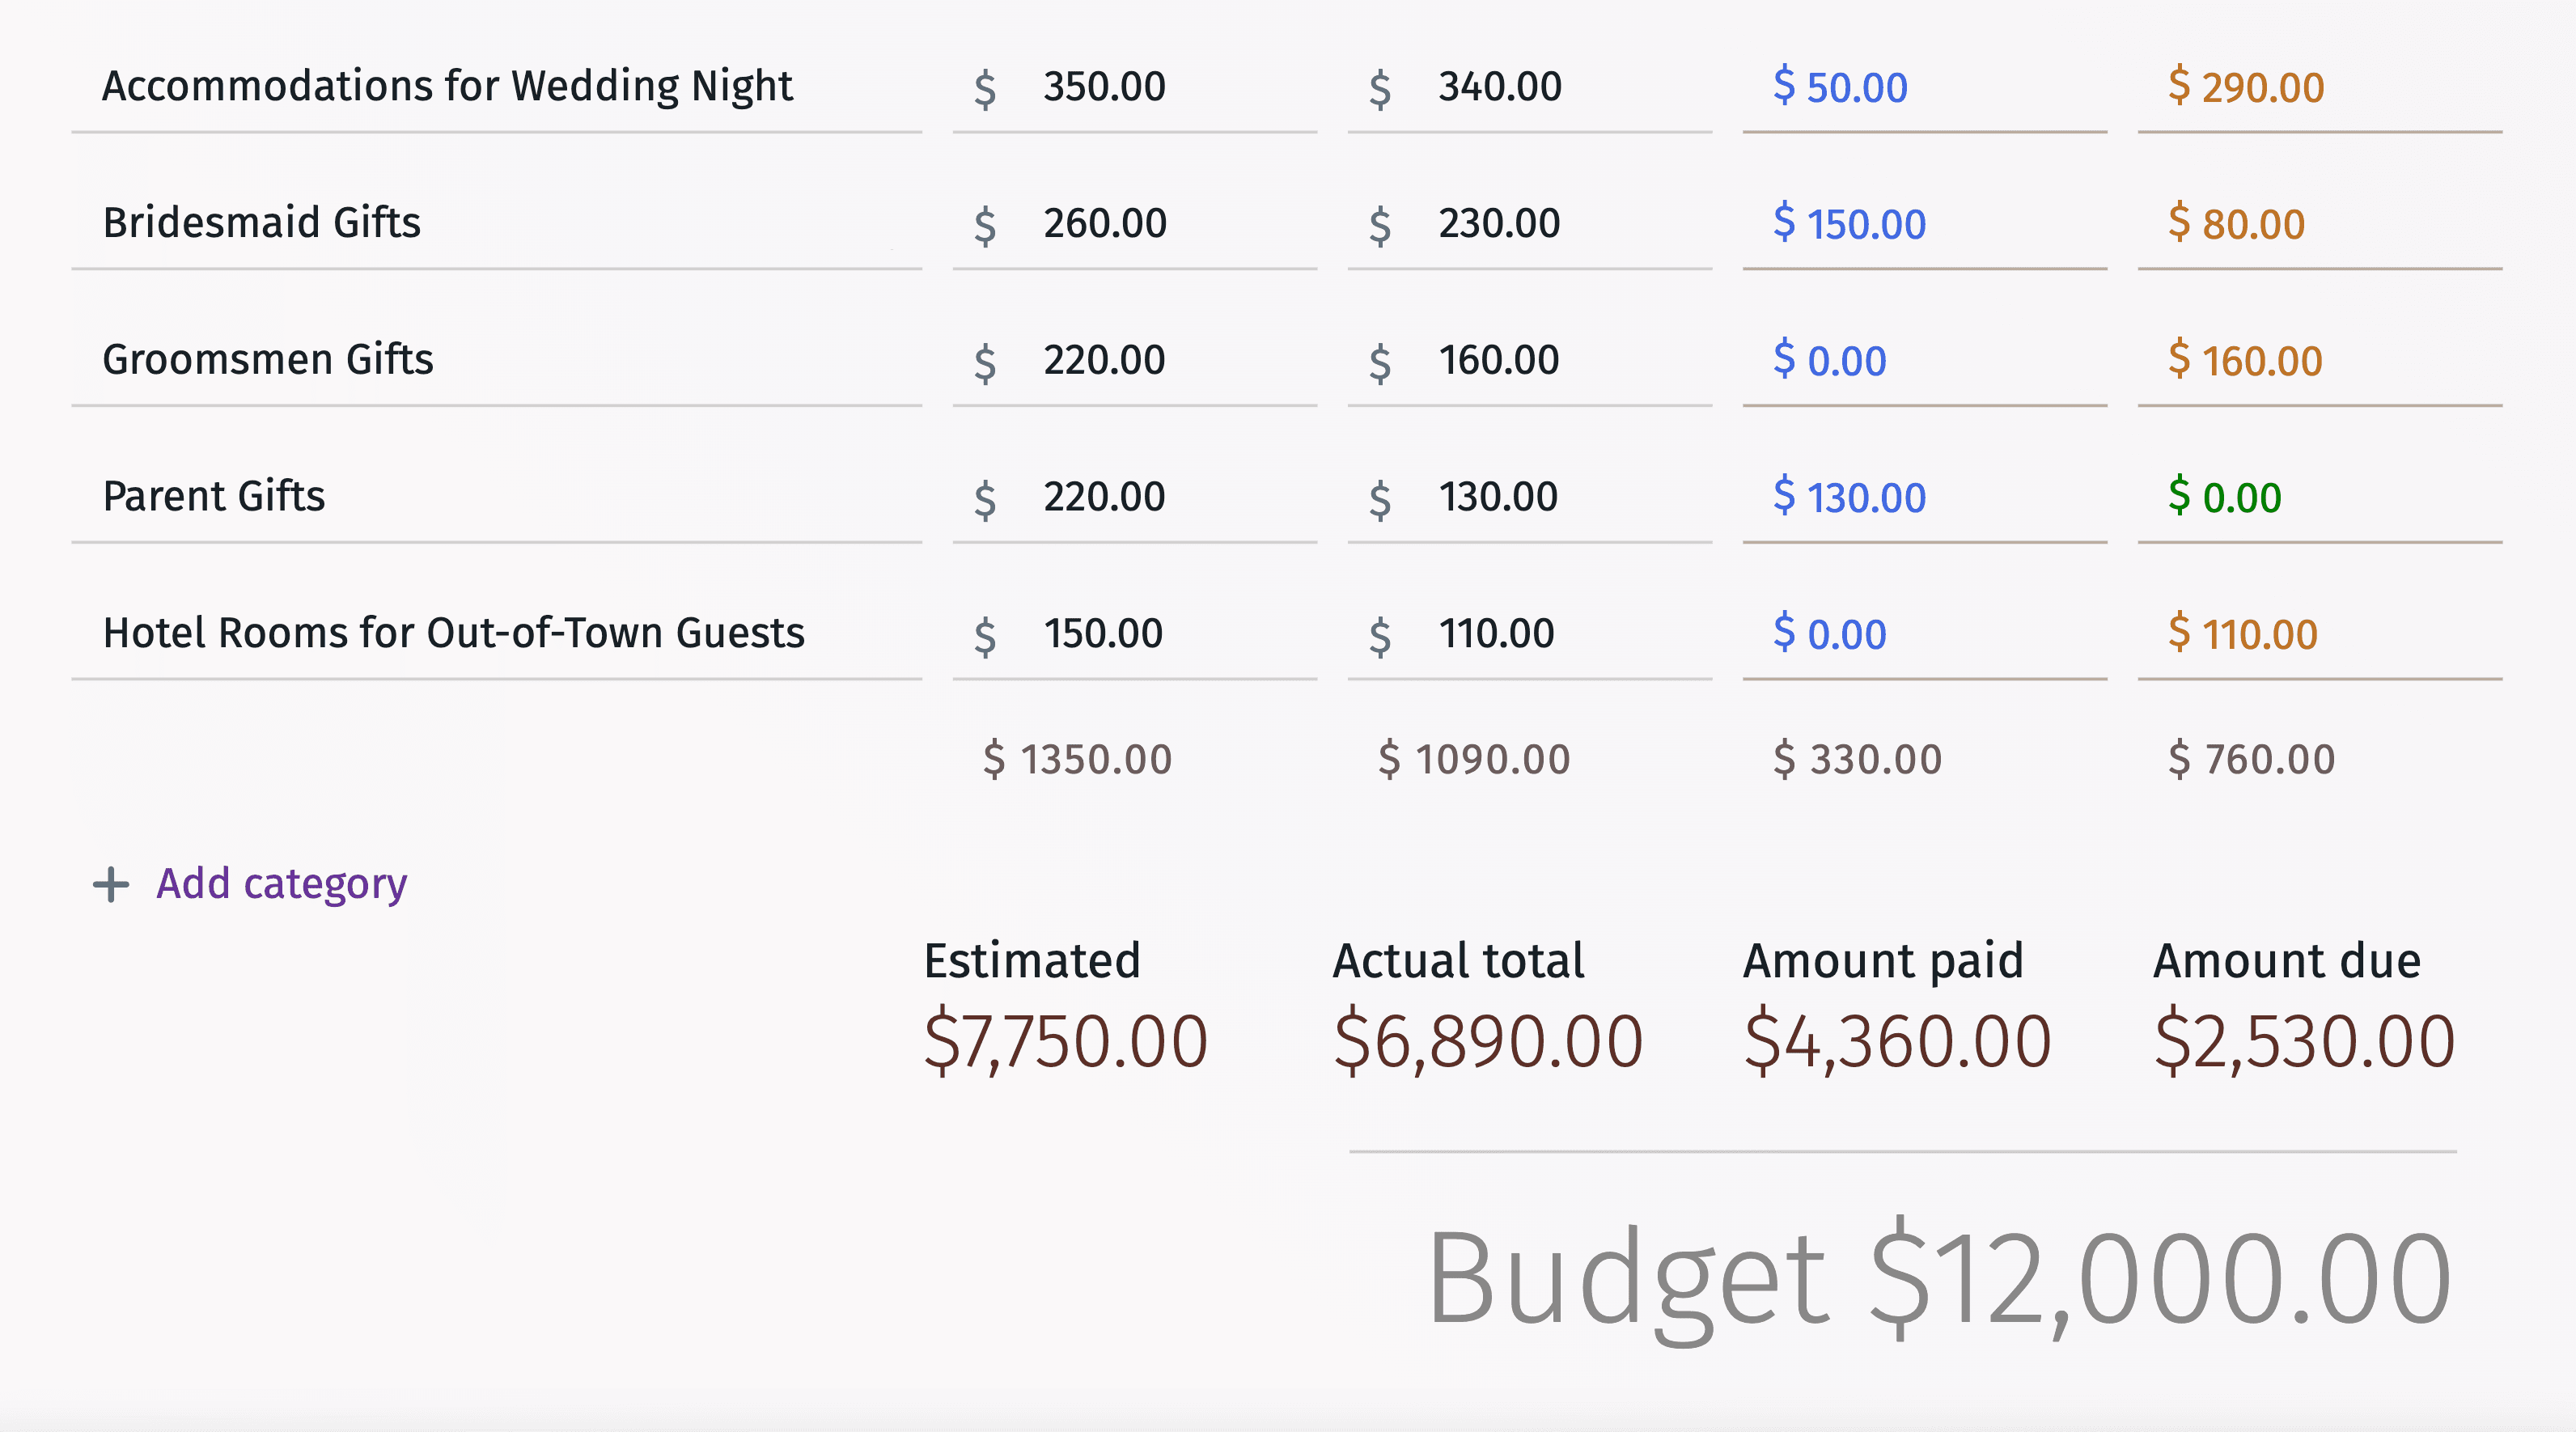 Interface of wedding budget spreadsheet